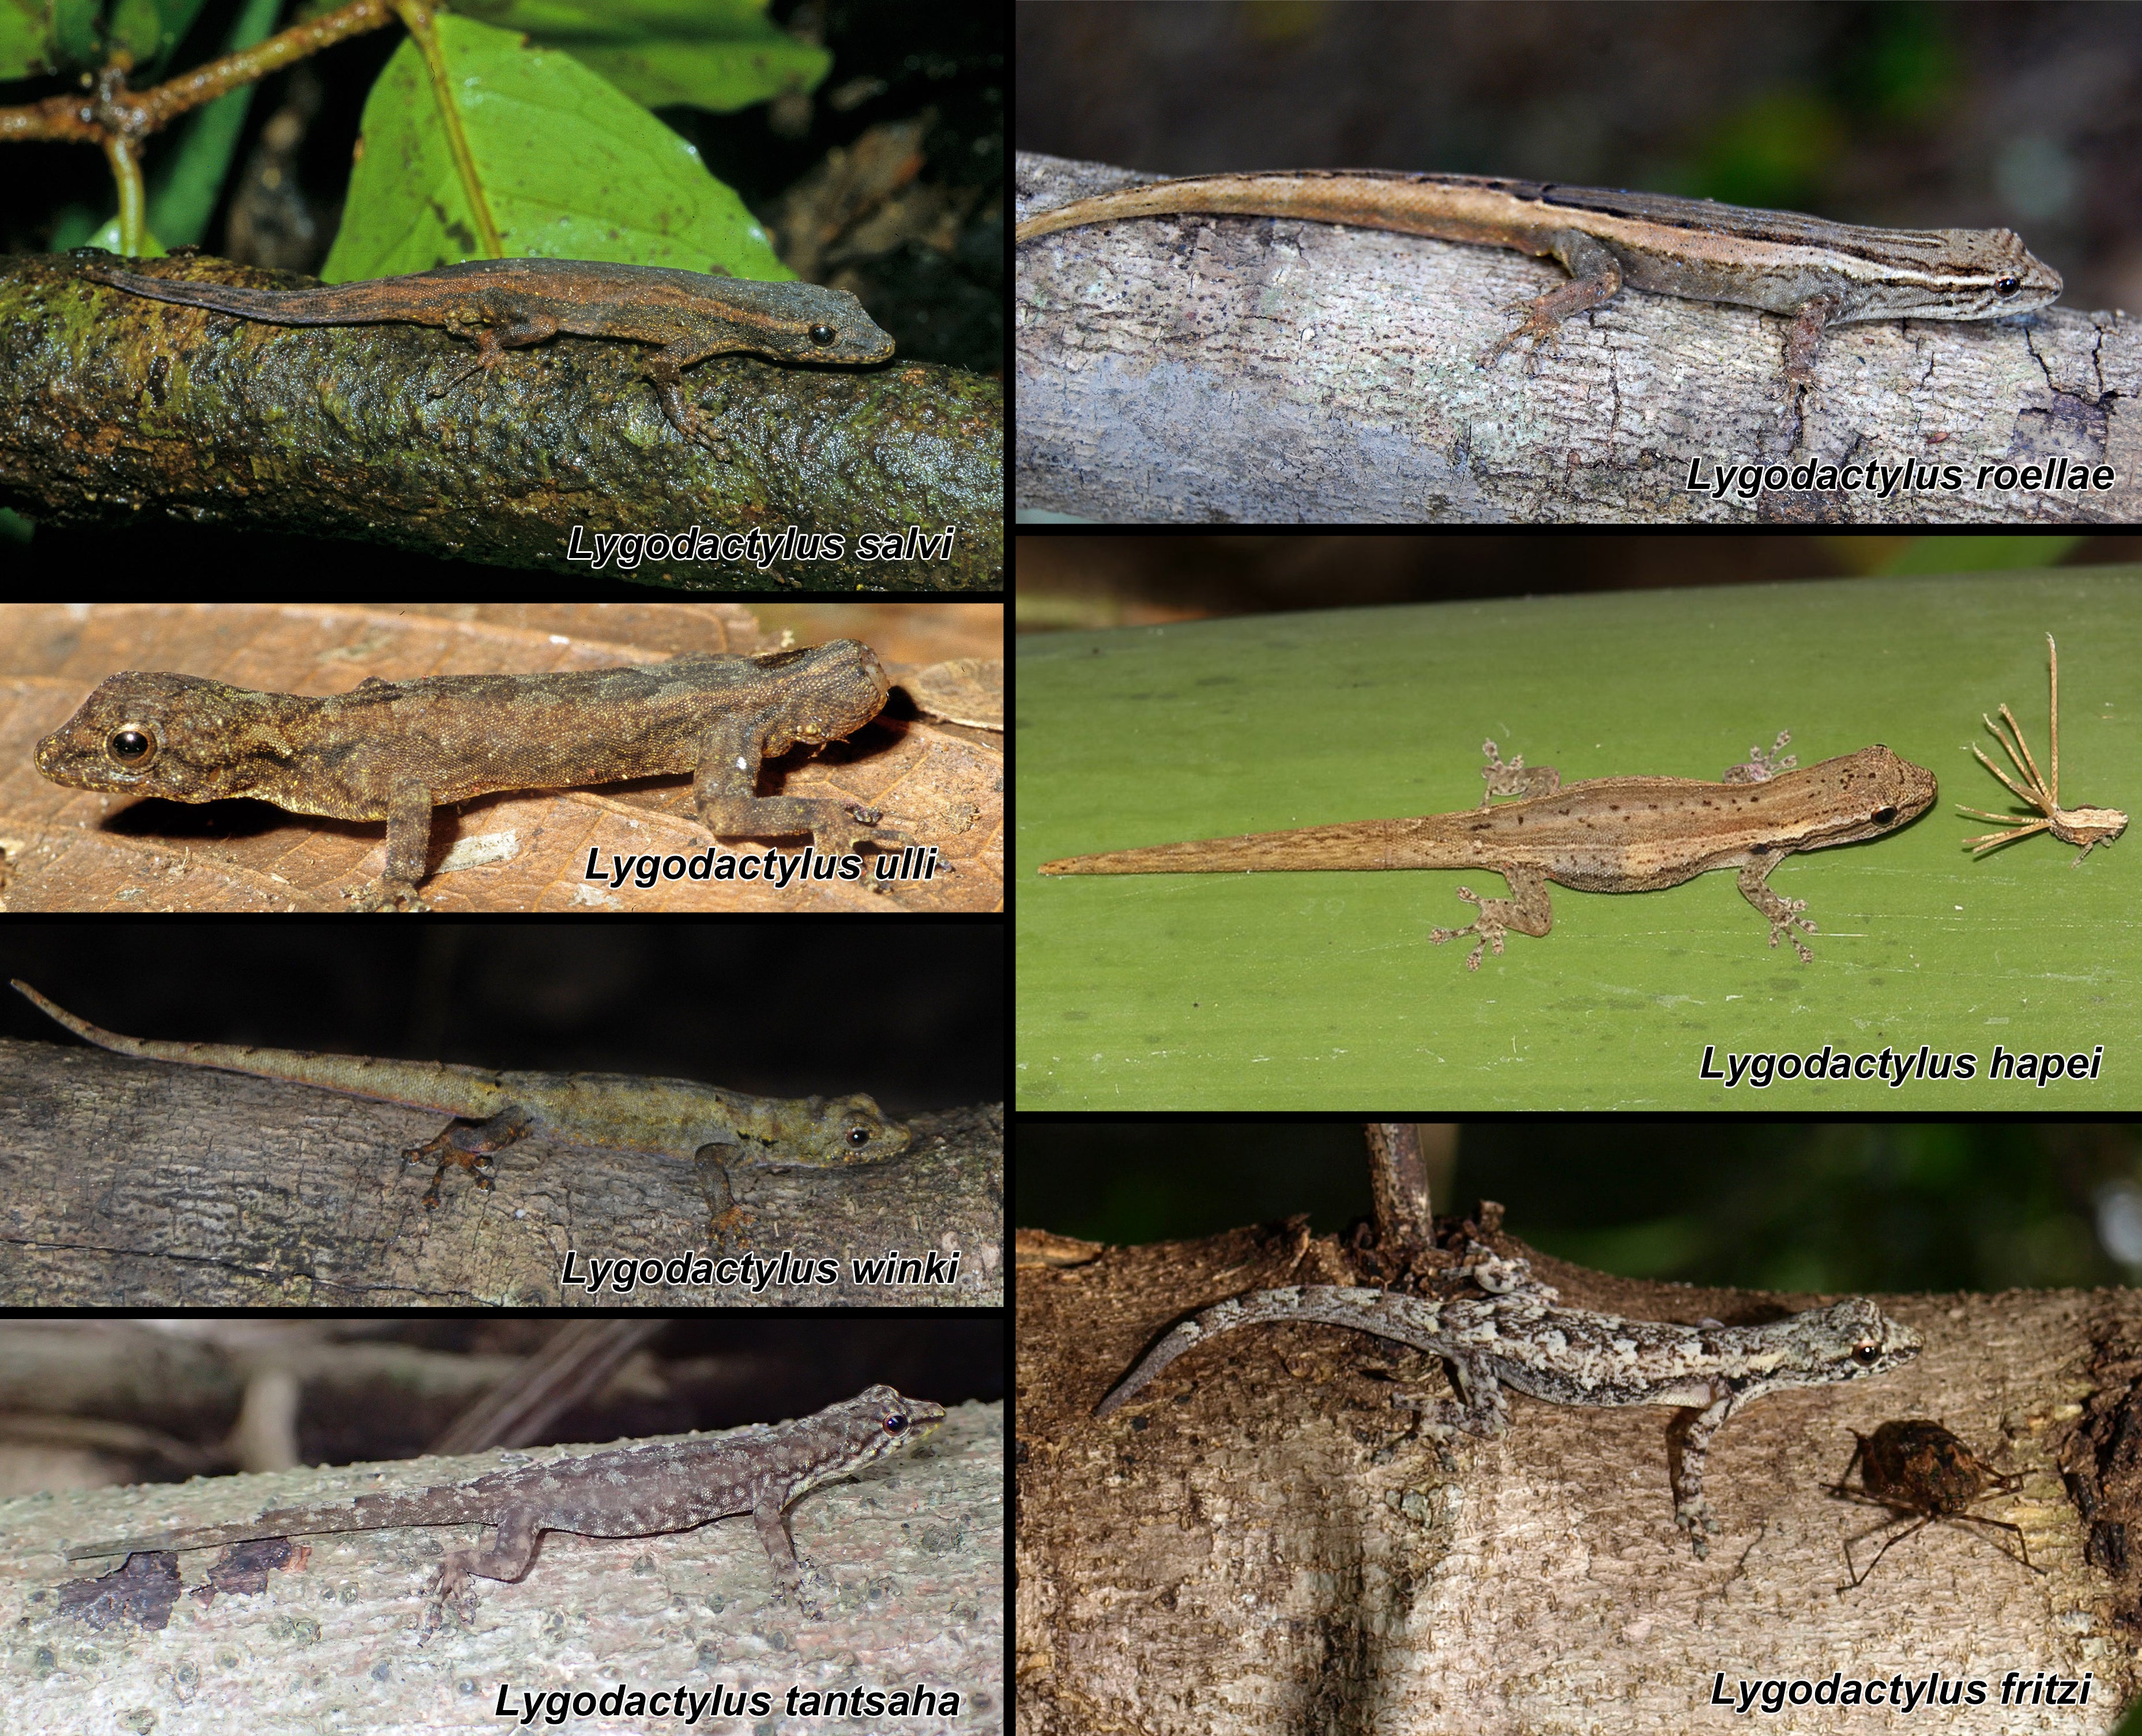 Seven of the genus Lygodactylus, described in the recent paper. (Photo: Vences et al., Zootaxa 2022)